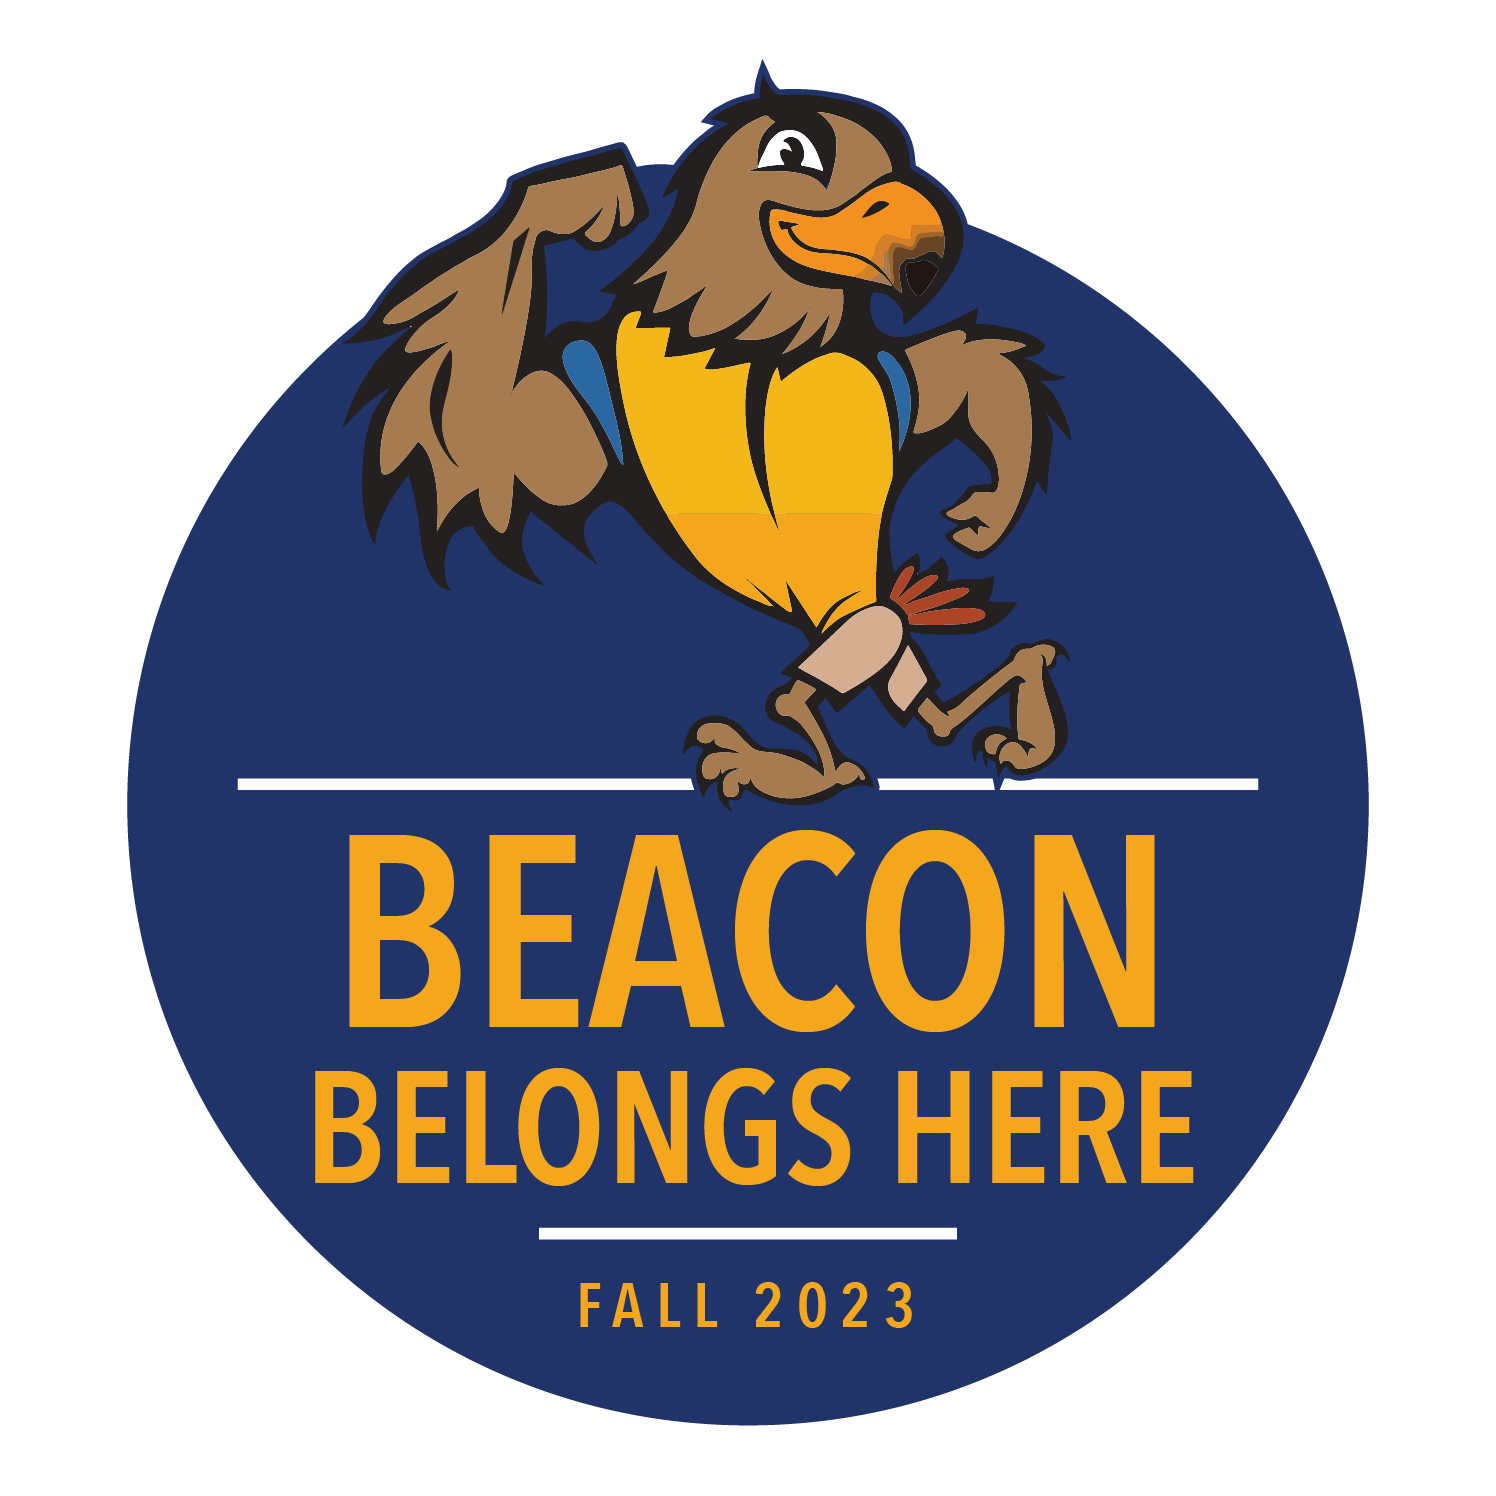 Beacon Belongs Here Illustration